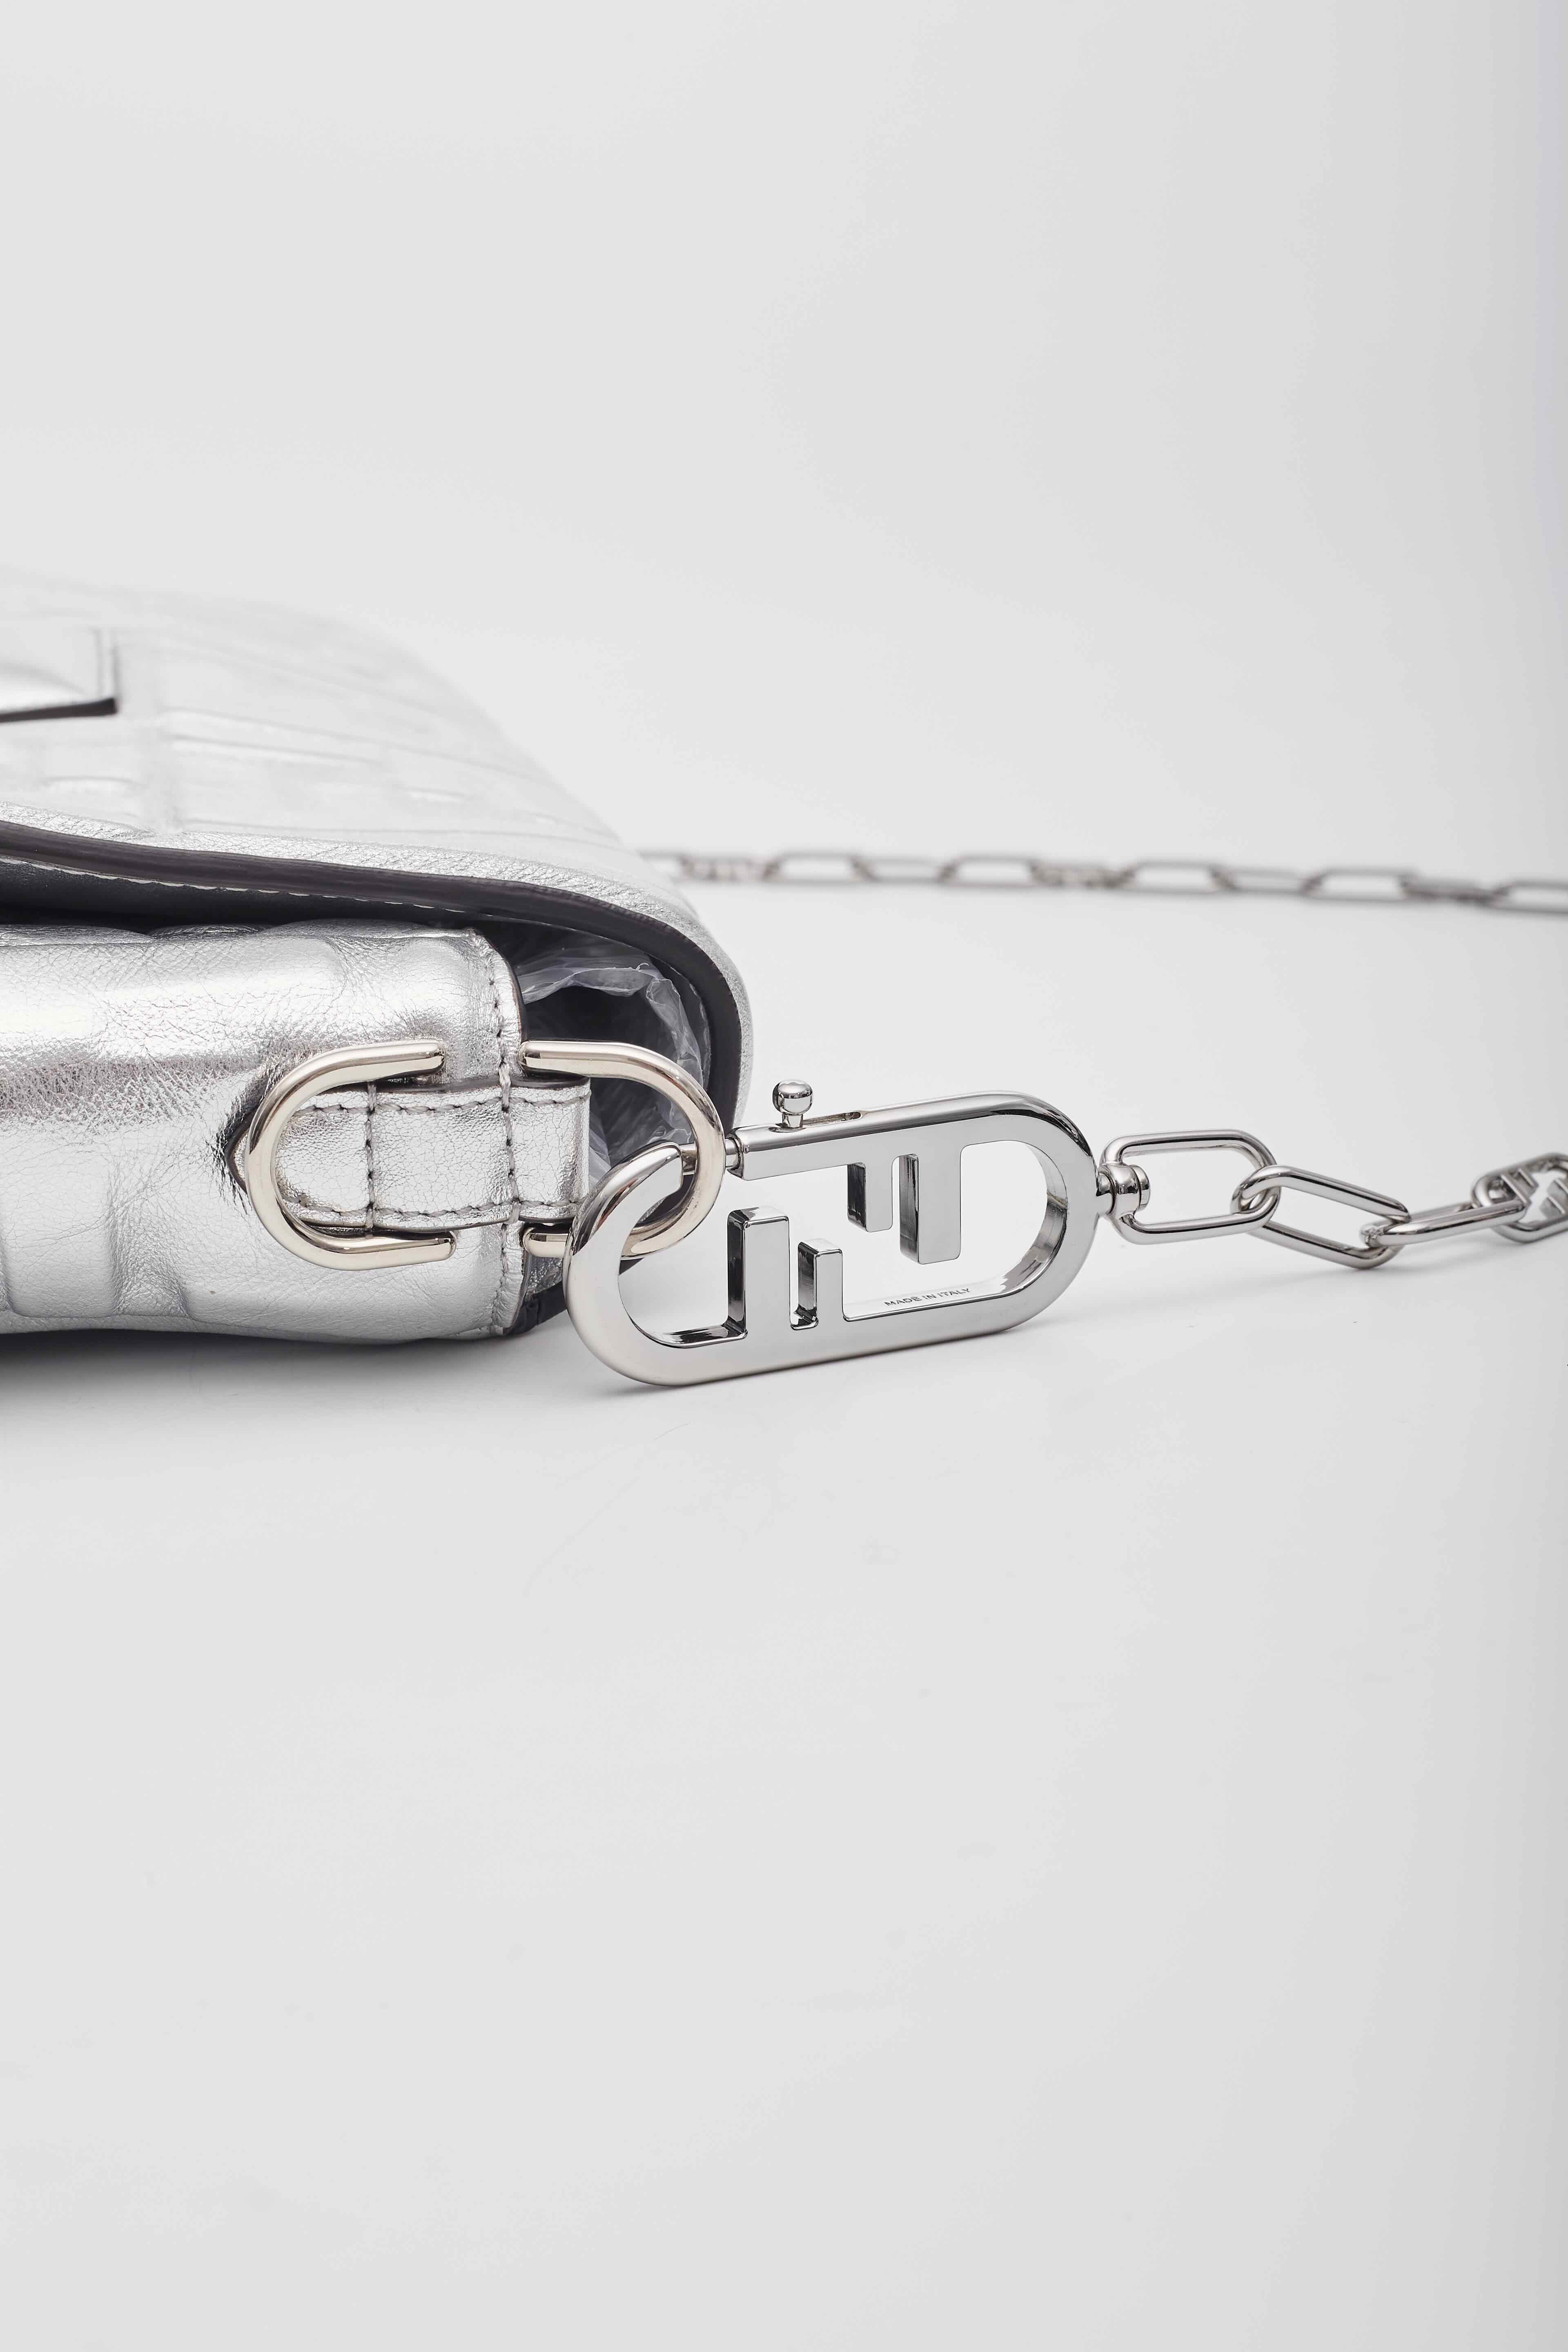 Fendi Metallic Silver Logo Embossed Baguette Bag Large For Sale 2